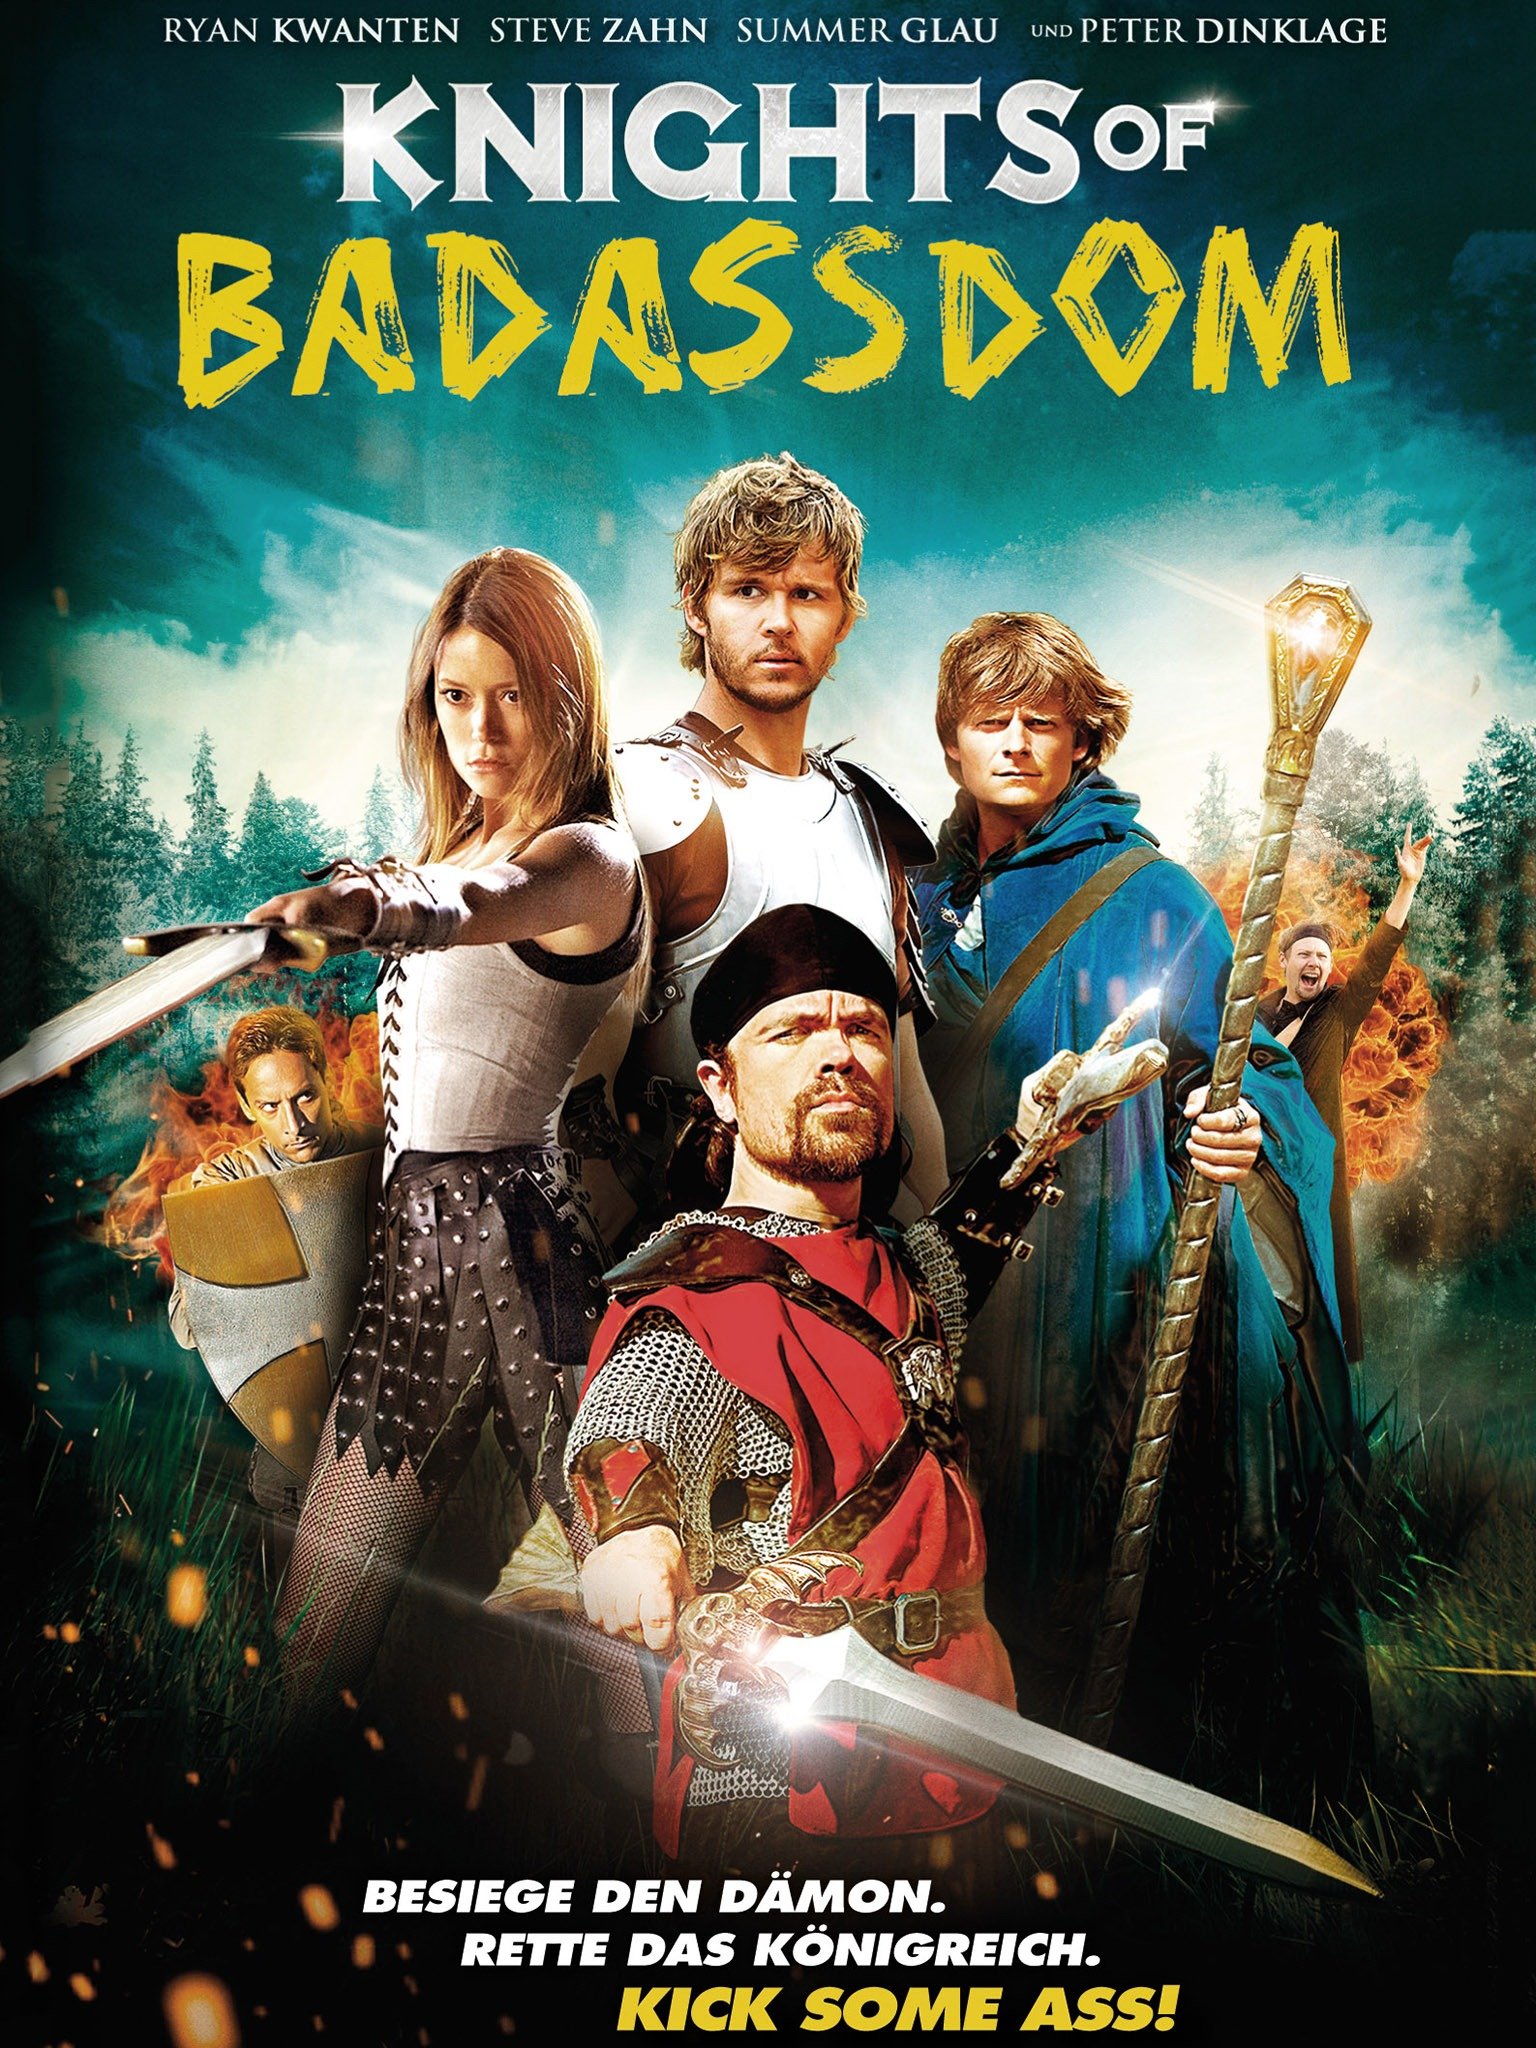 Knights of Badassdom pic image